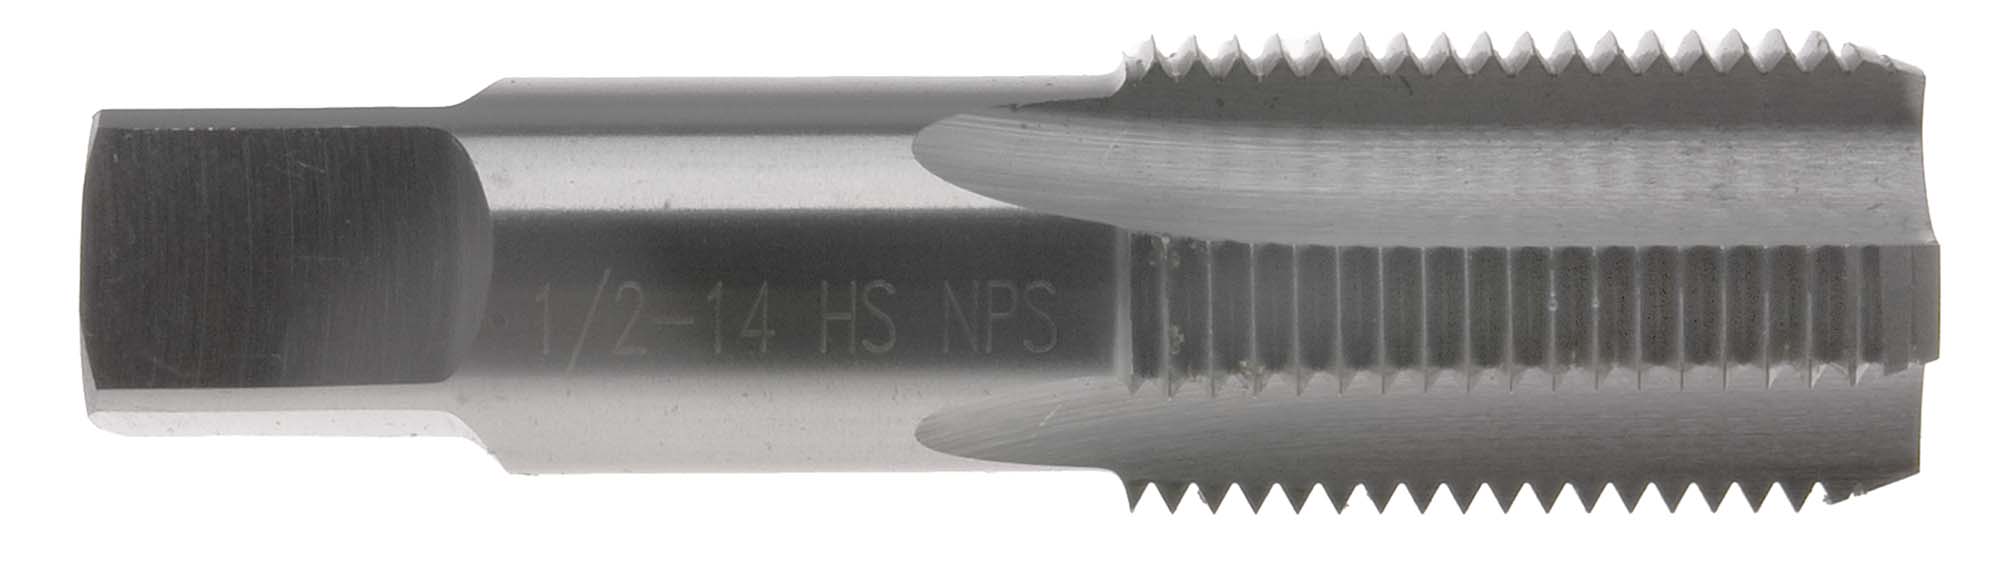 1"-11 1/2 NPS Straight Pipe Tap, High Speed Steel